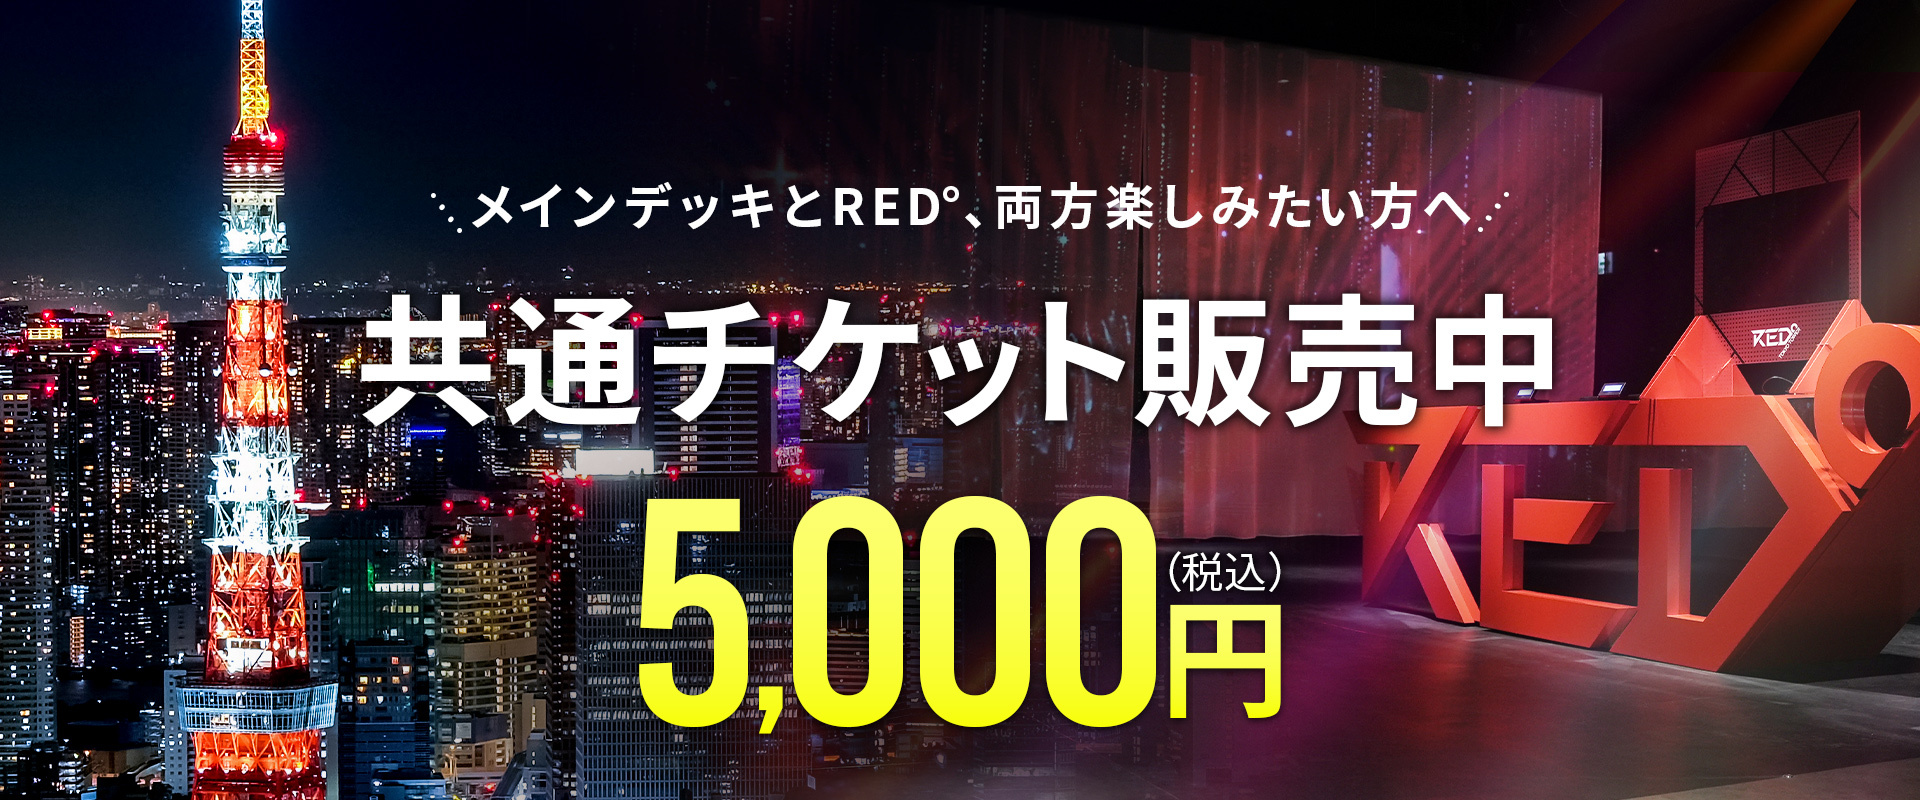 Tokyo Tower x RED° TOKYO TOWER common ticket sales start